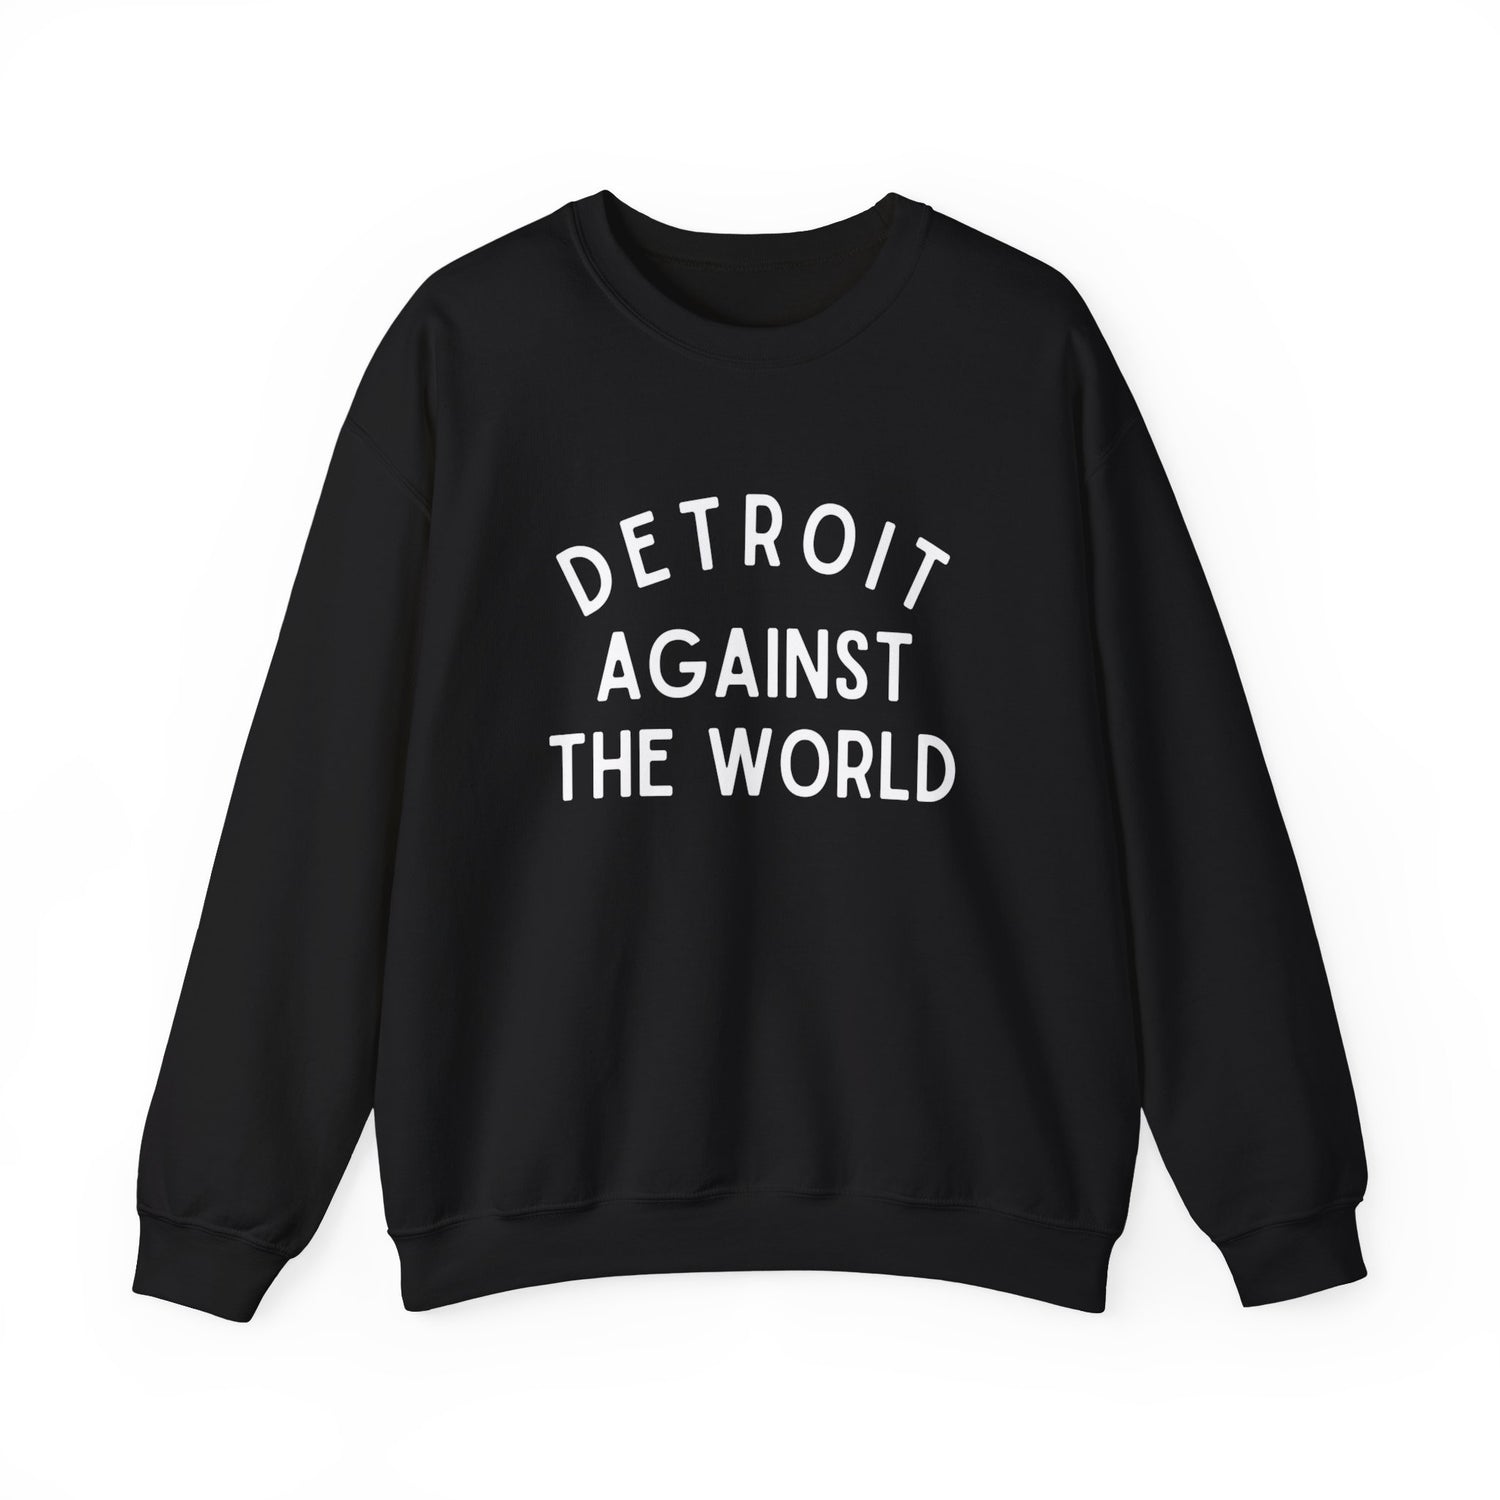 Detroit Against the World Crewneck Sweatshirt